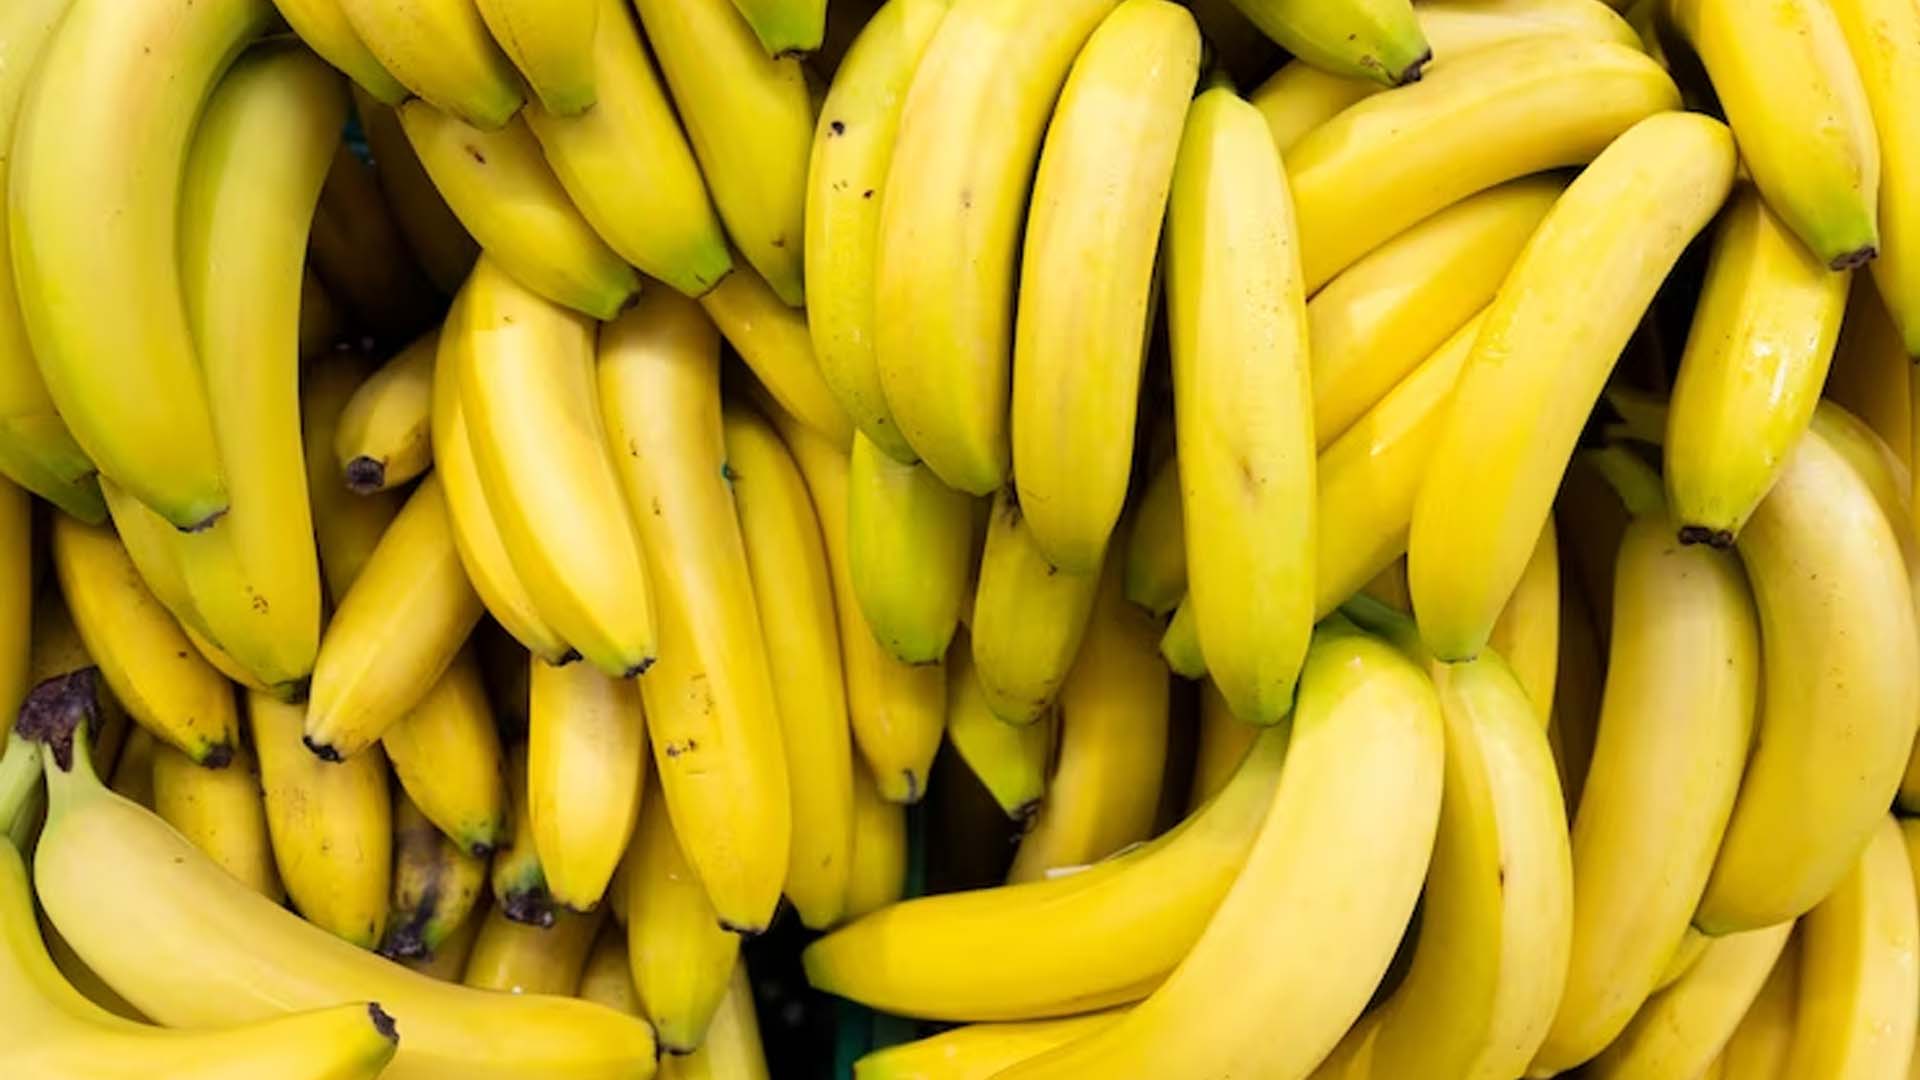 Do Bananas Cause Constipation?